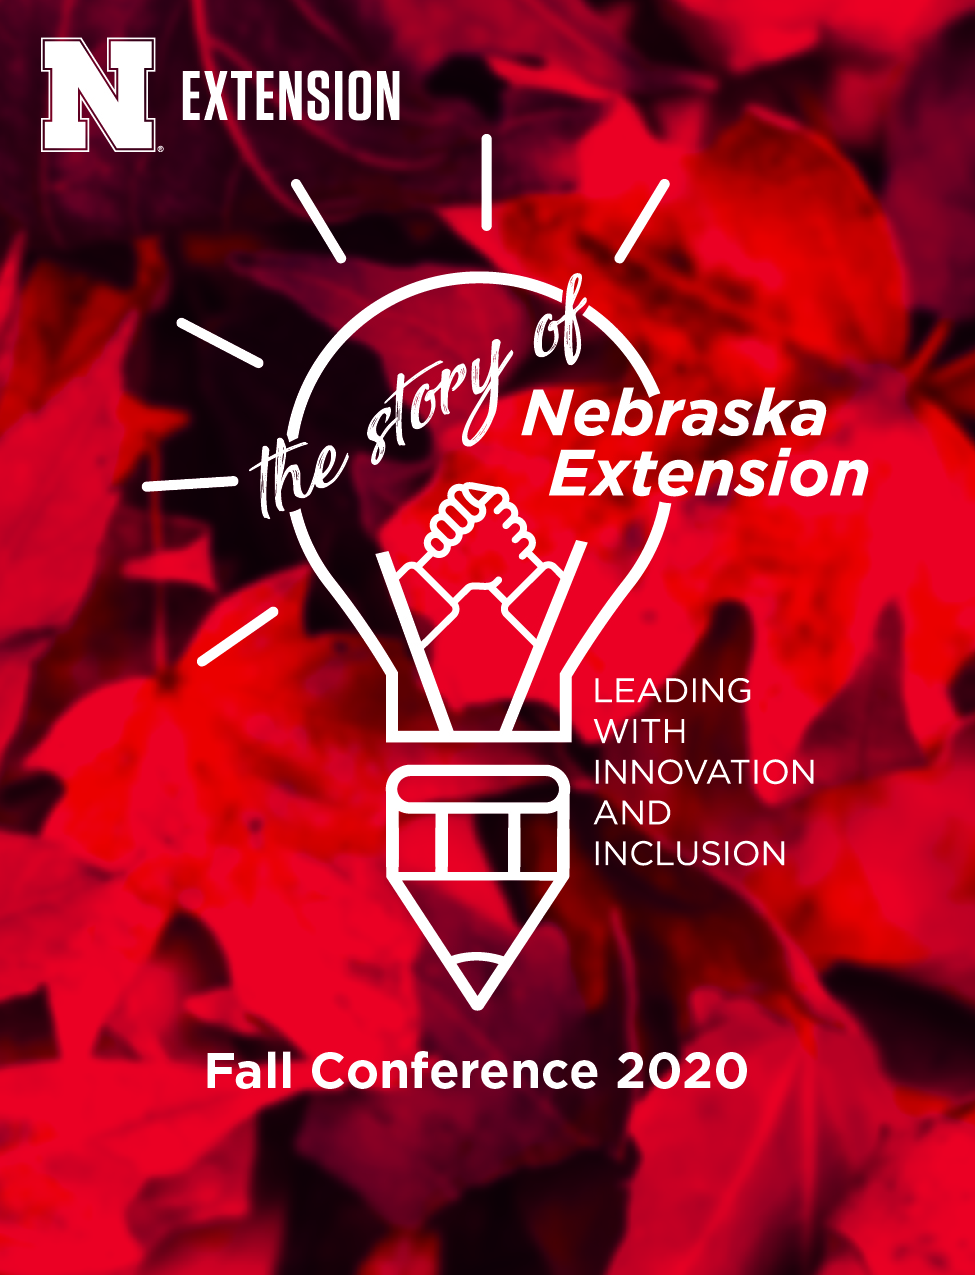 Sign Up for Nebraska Extension Fall Conference 2020 Deadline Friday